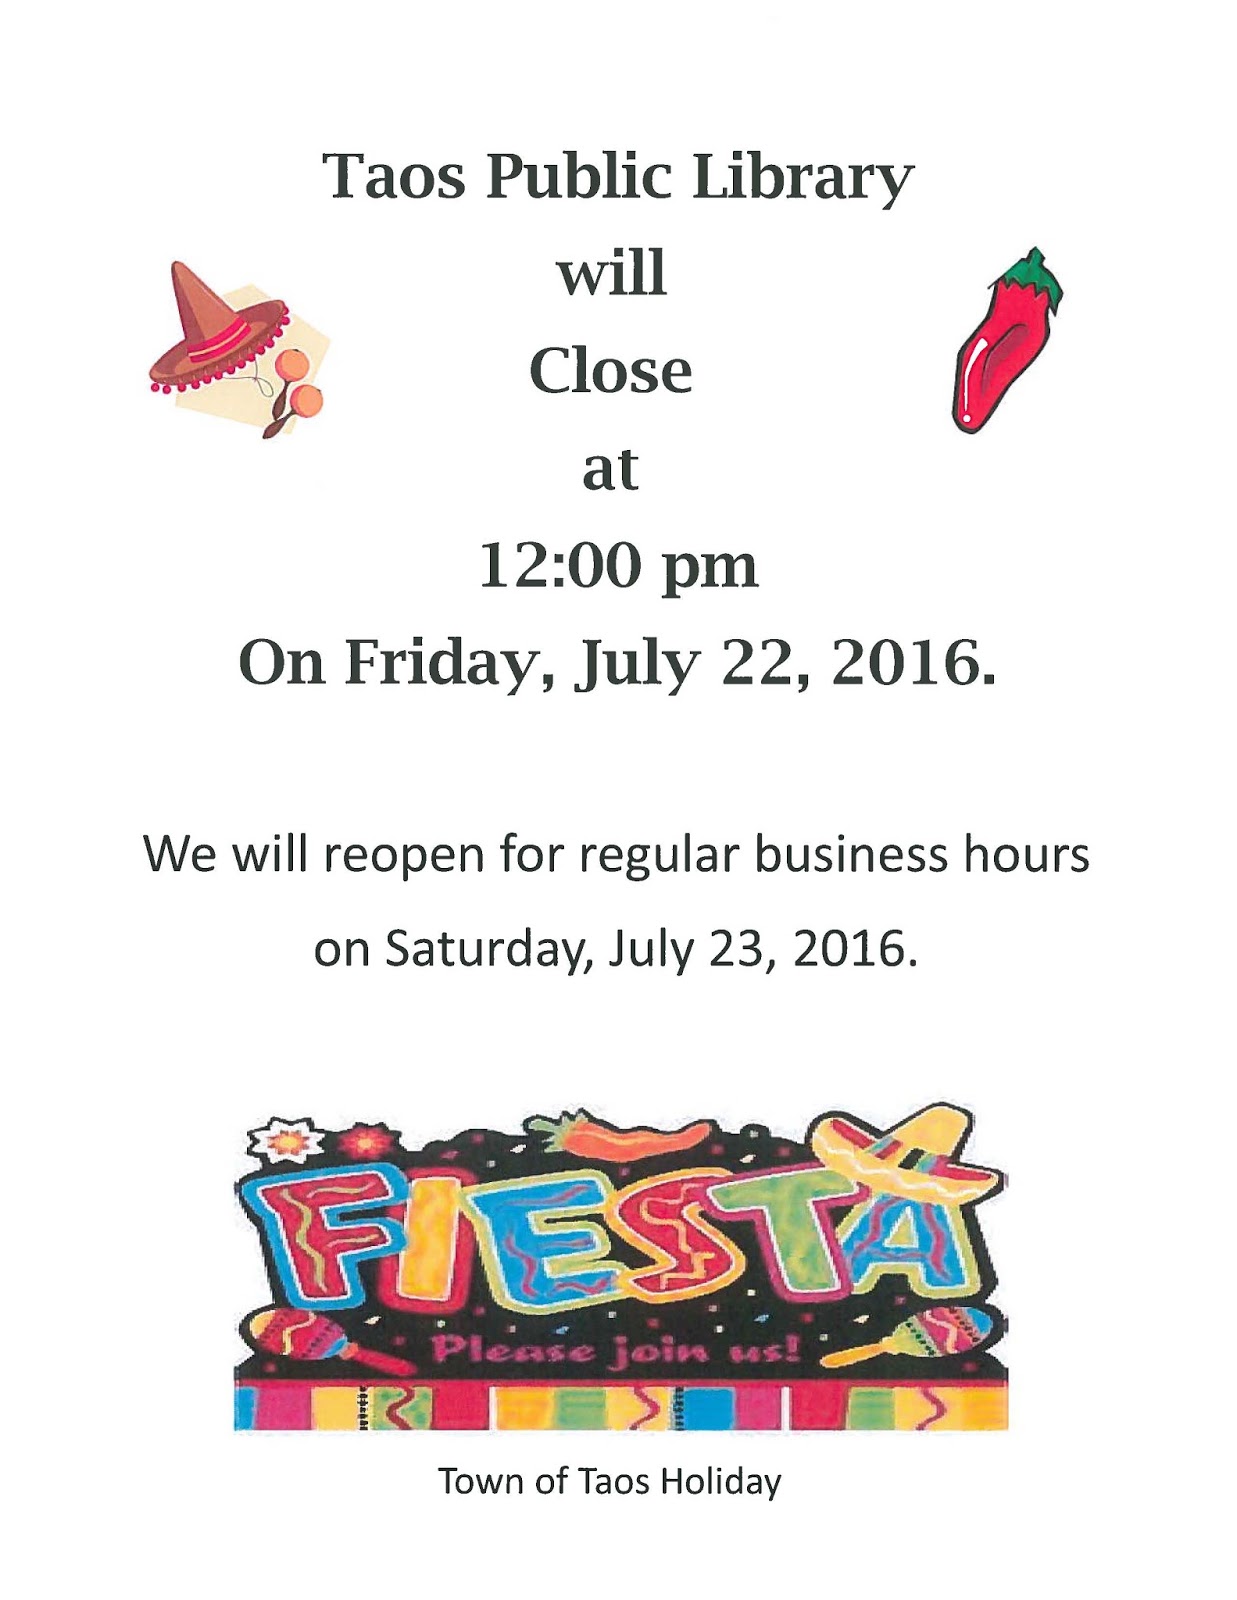 library-lowdown-town-of-taos-holiday-taos-public-library-closing-at